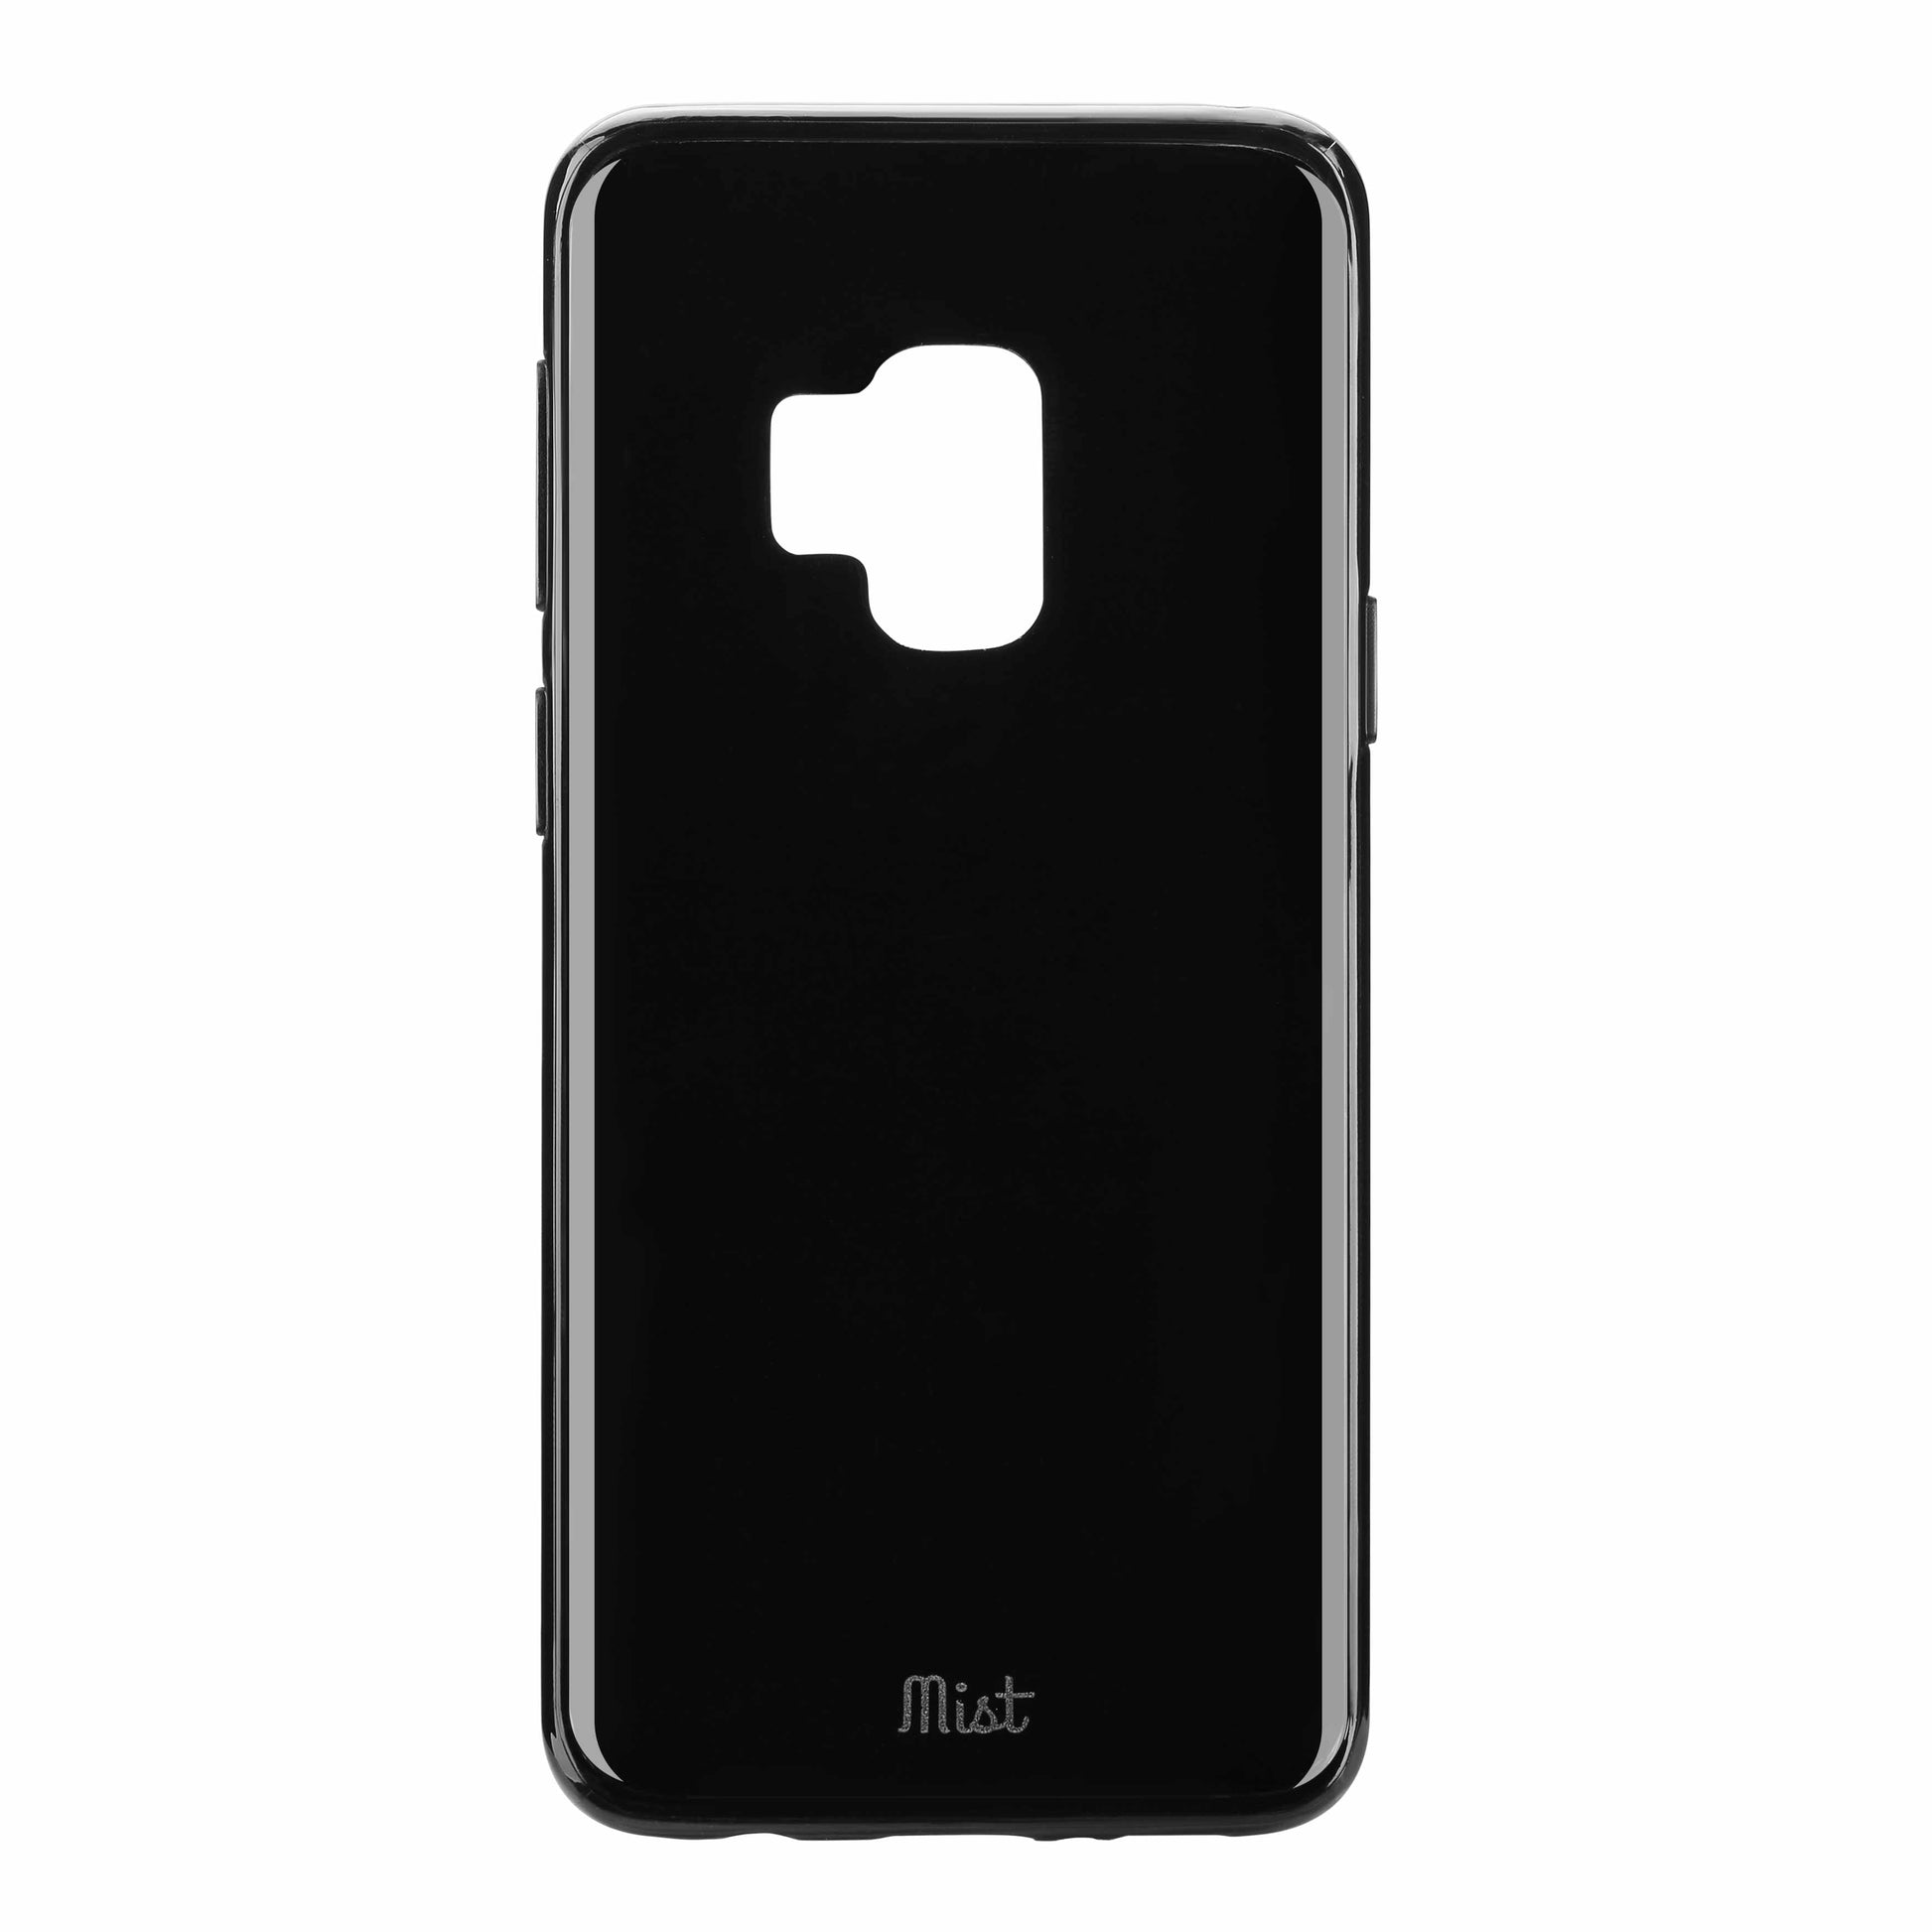 Mist Fashion Case Black Marble for Galaxy S9